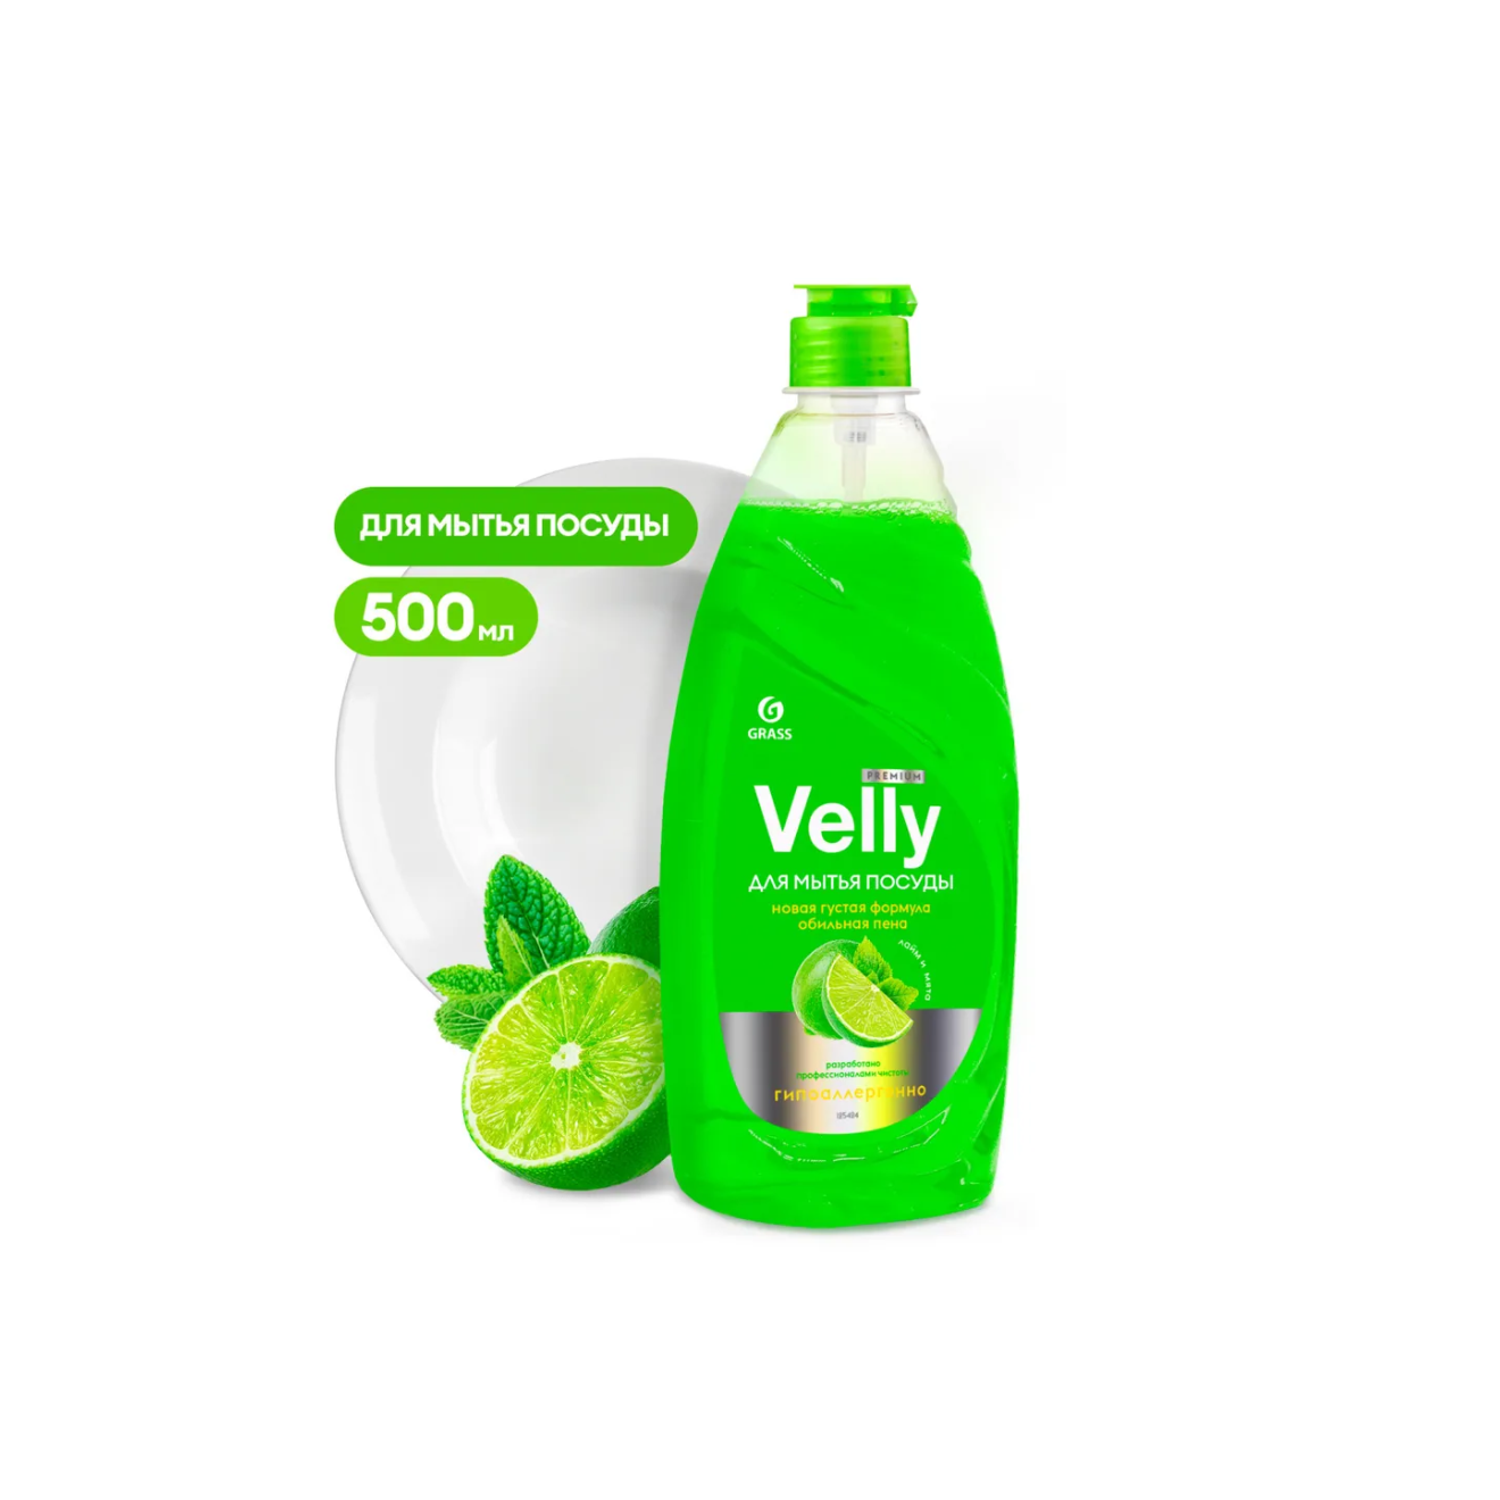 Средство для мытья посуды GraSS Velly Premium лайм и мята - фото 1